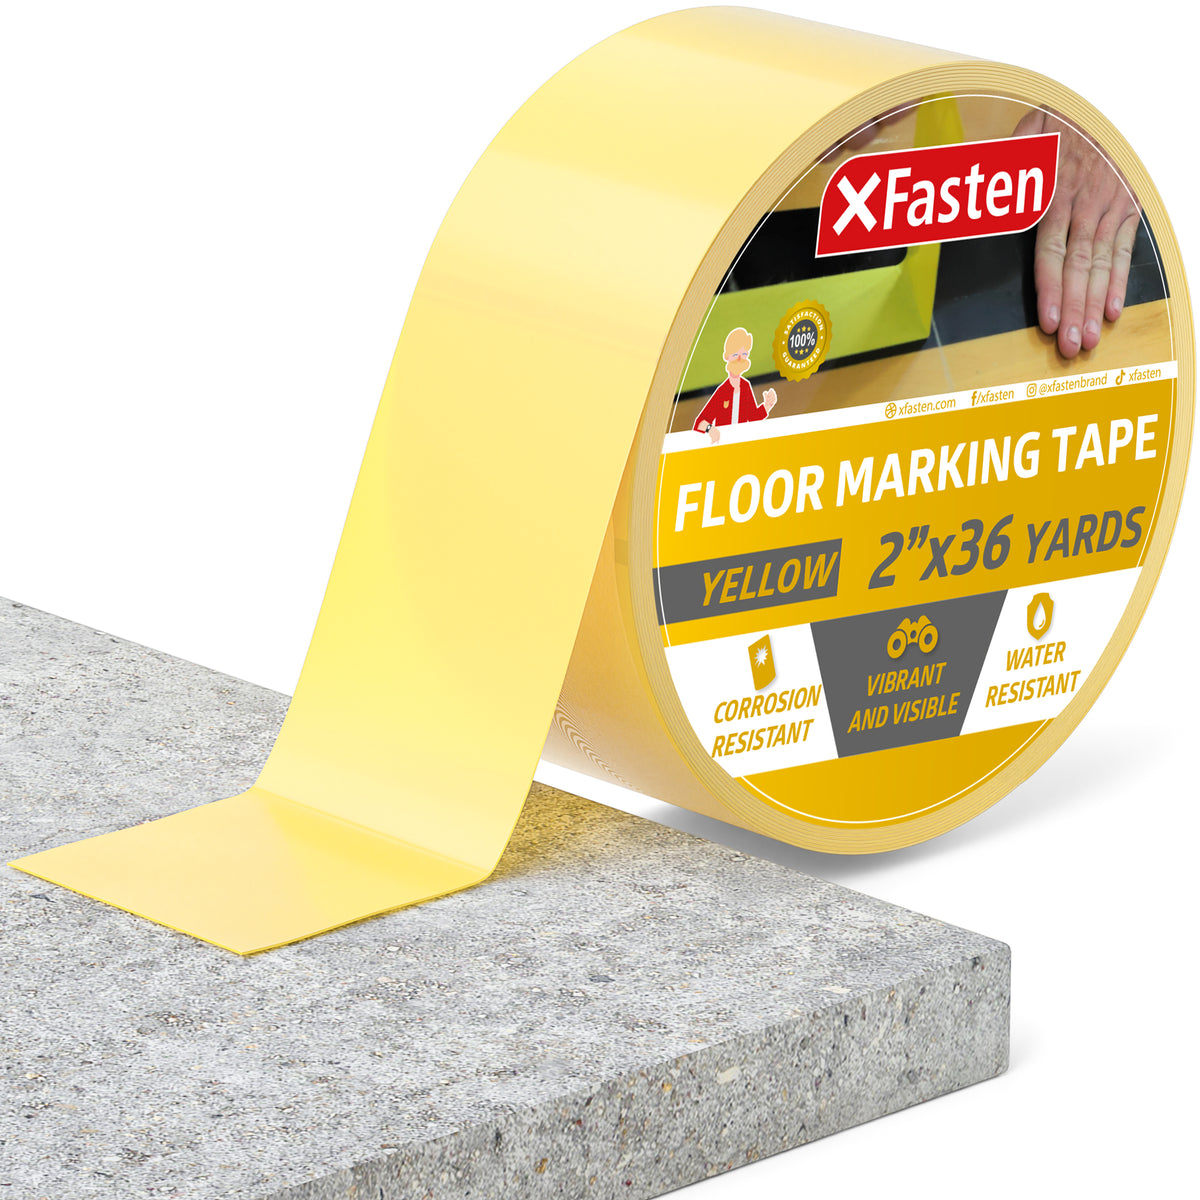 MAT Tape Vinyl Marking Tape Clear 6 in. x 36 yd. Safety Floor Marking